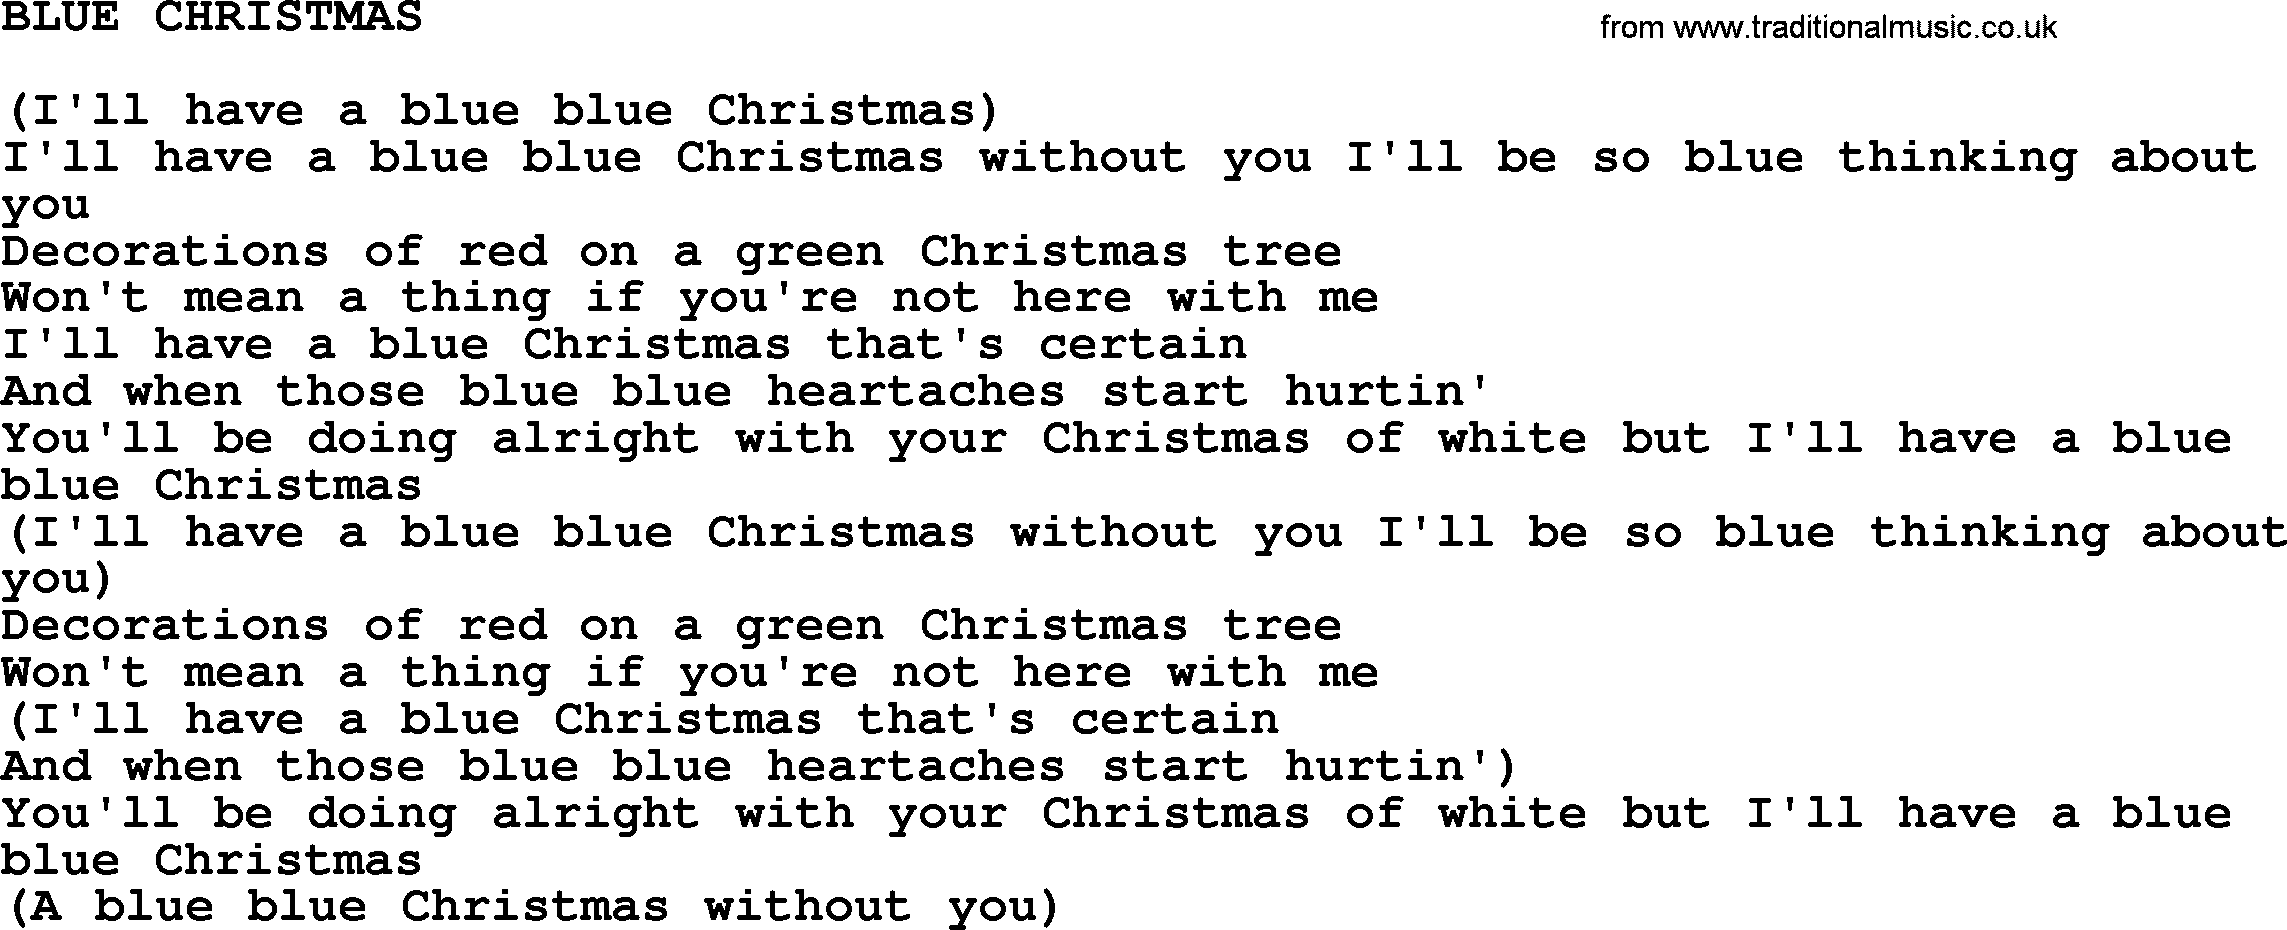 Johnny Cash song Blue Christmas.txt lyrics